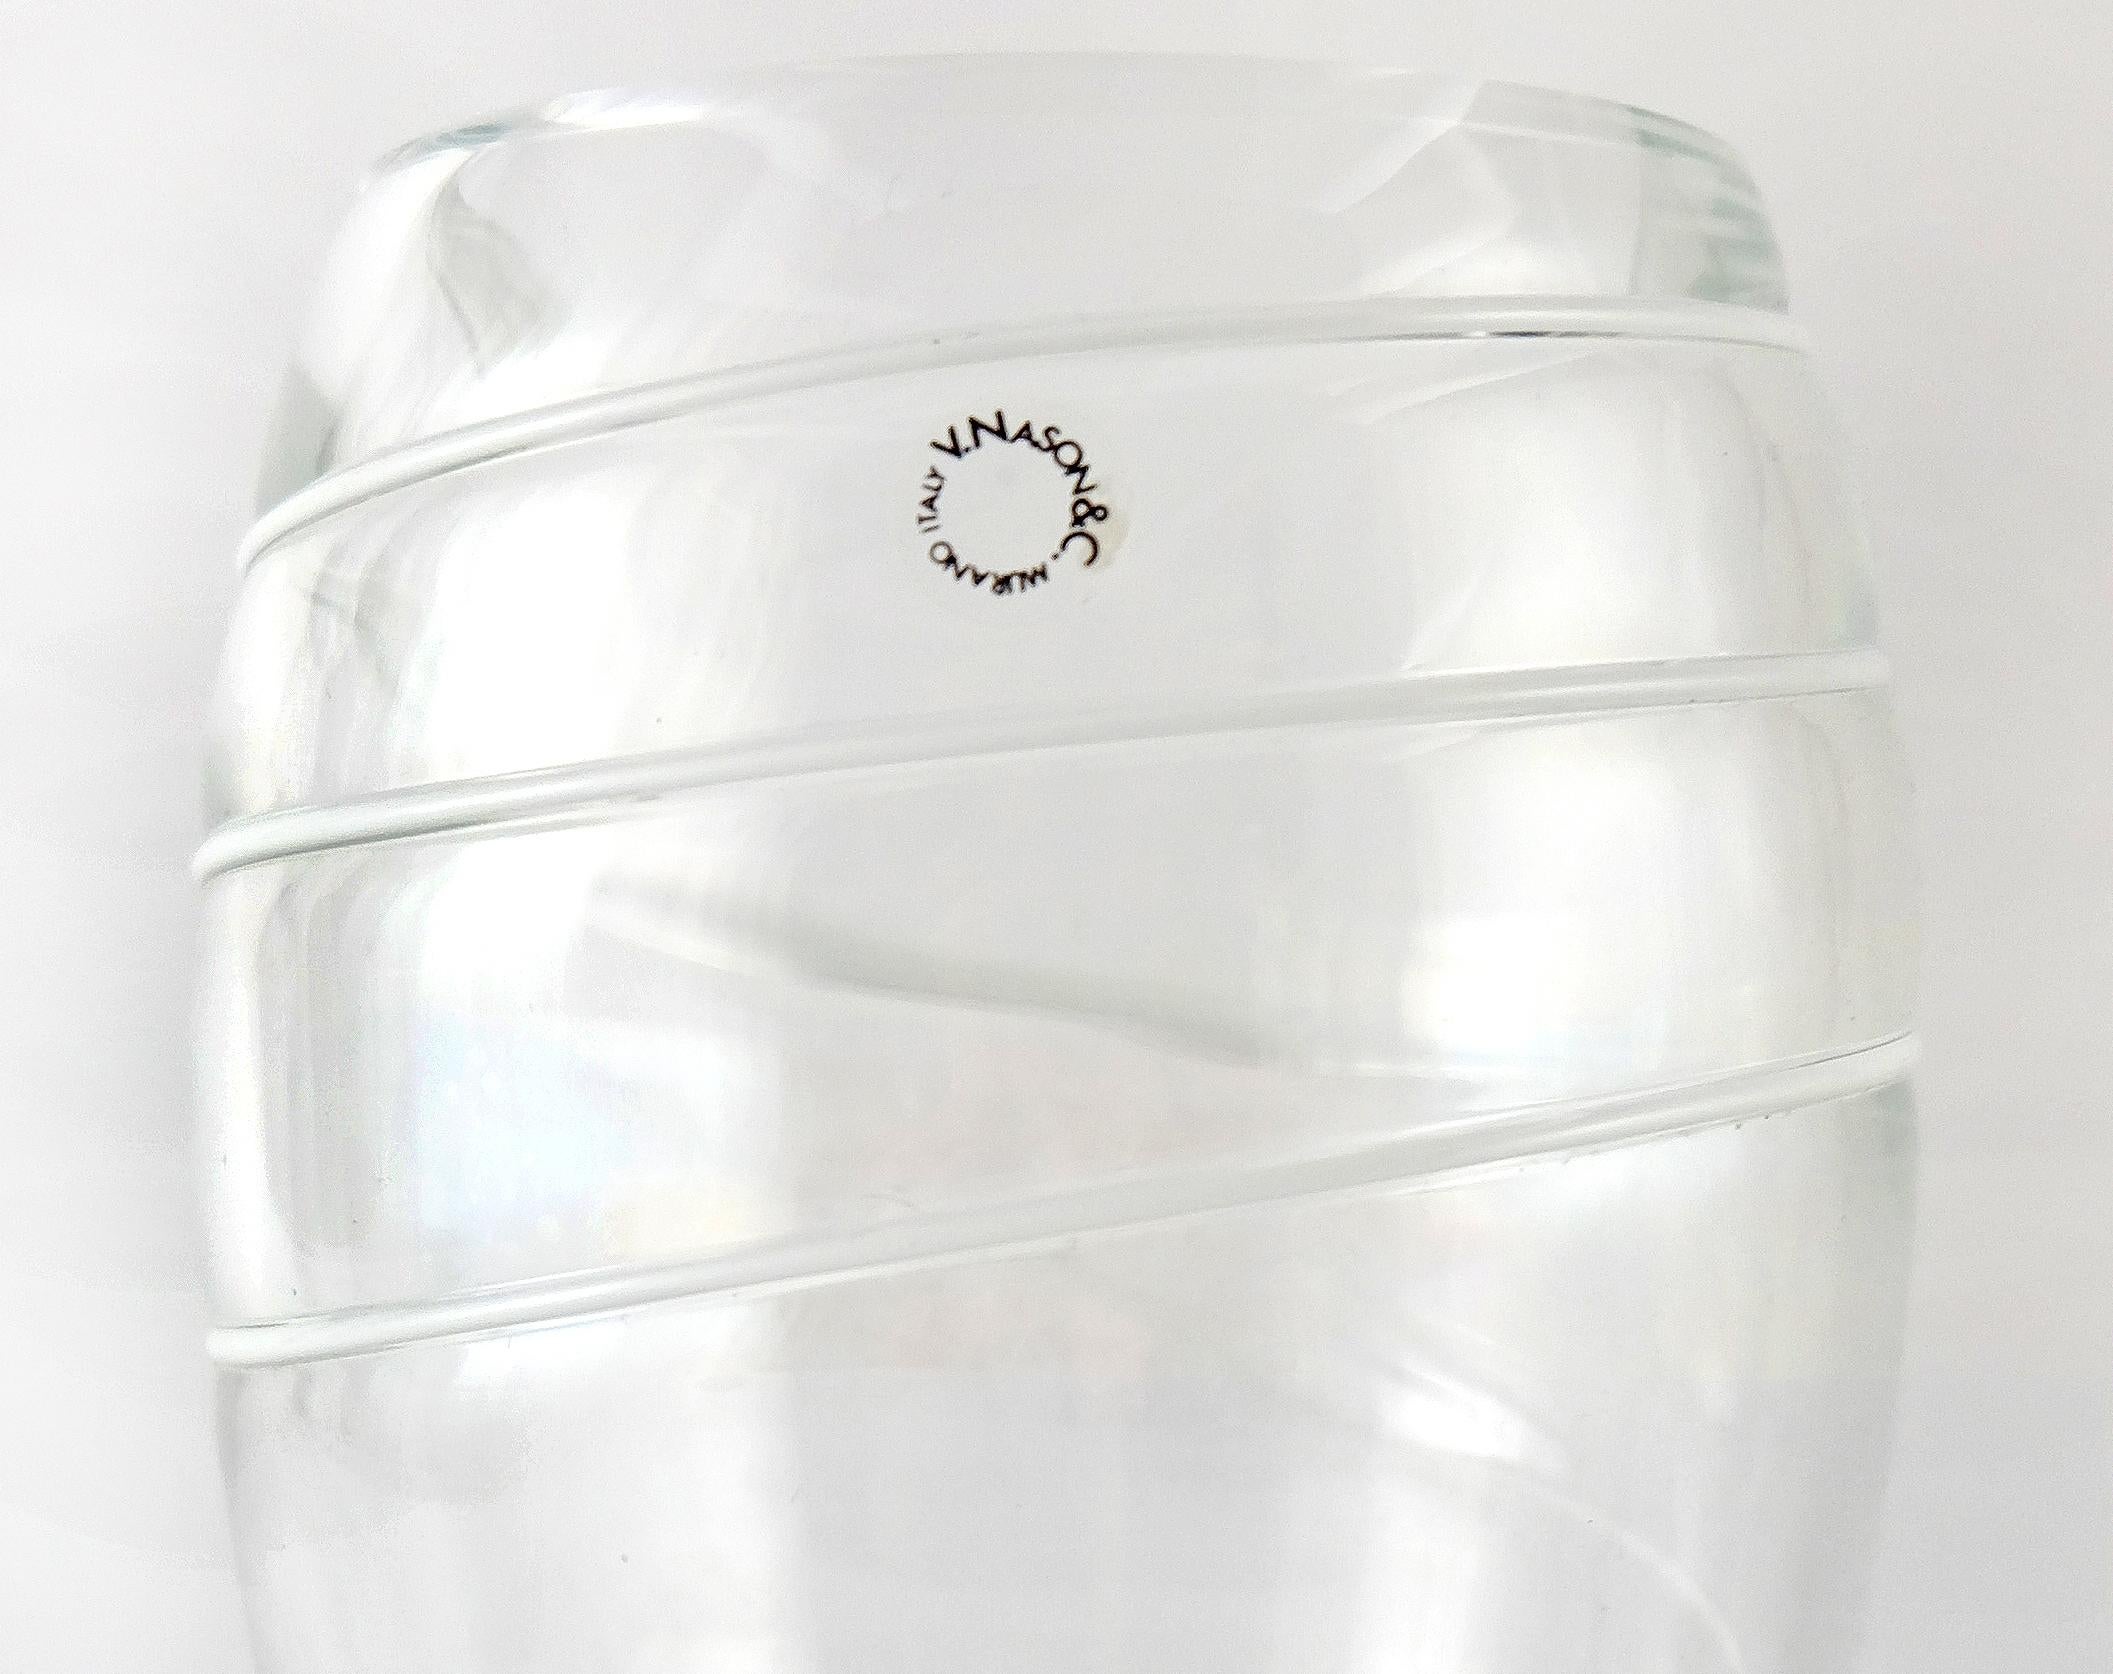 Italian  V. Nason & C. Italy Murano Glass Vase with White Spiral Stripes